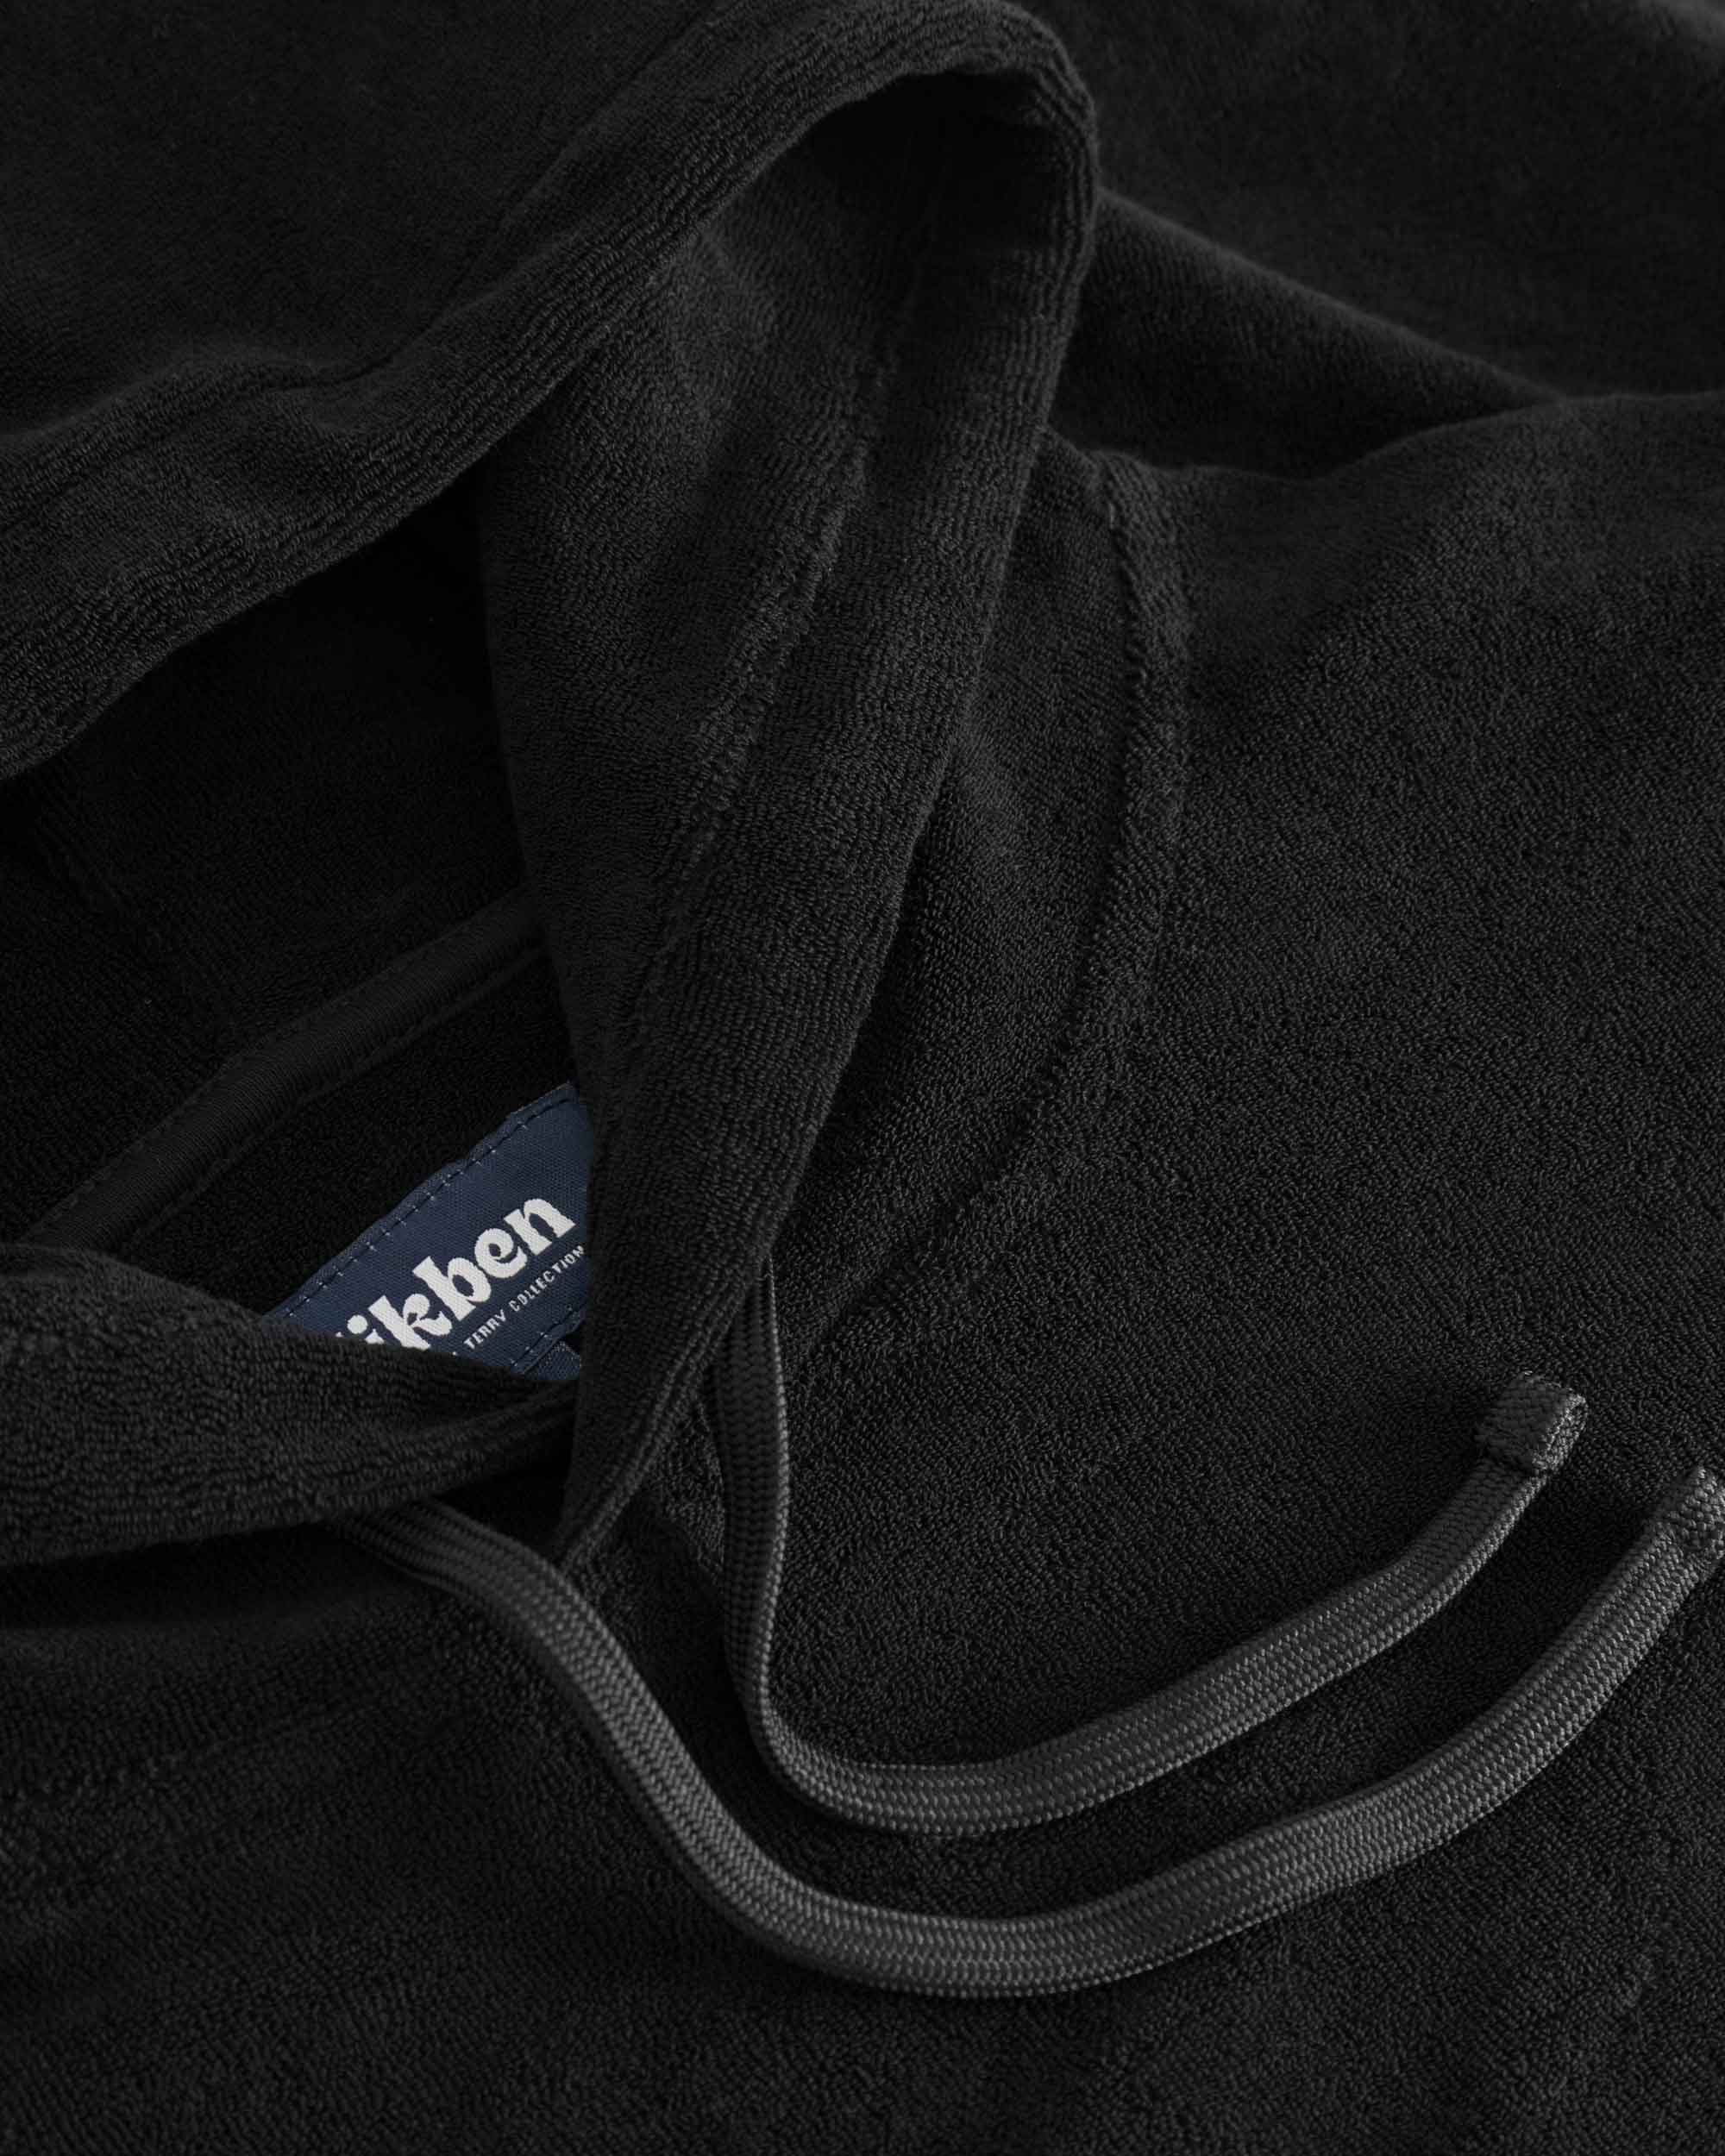 Close up of drawstings on a black hoodie.